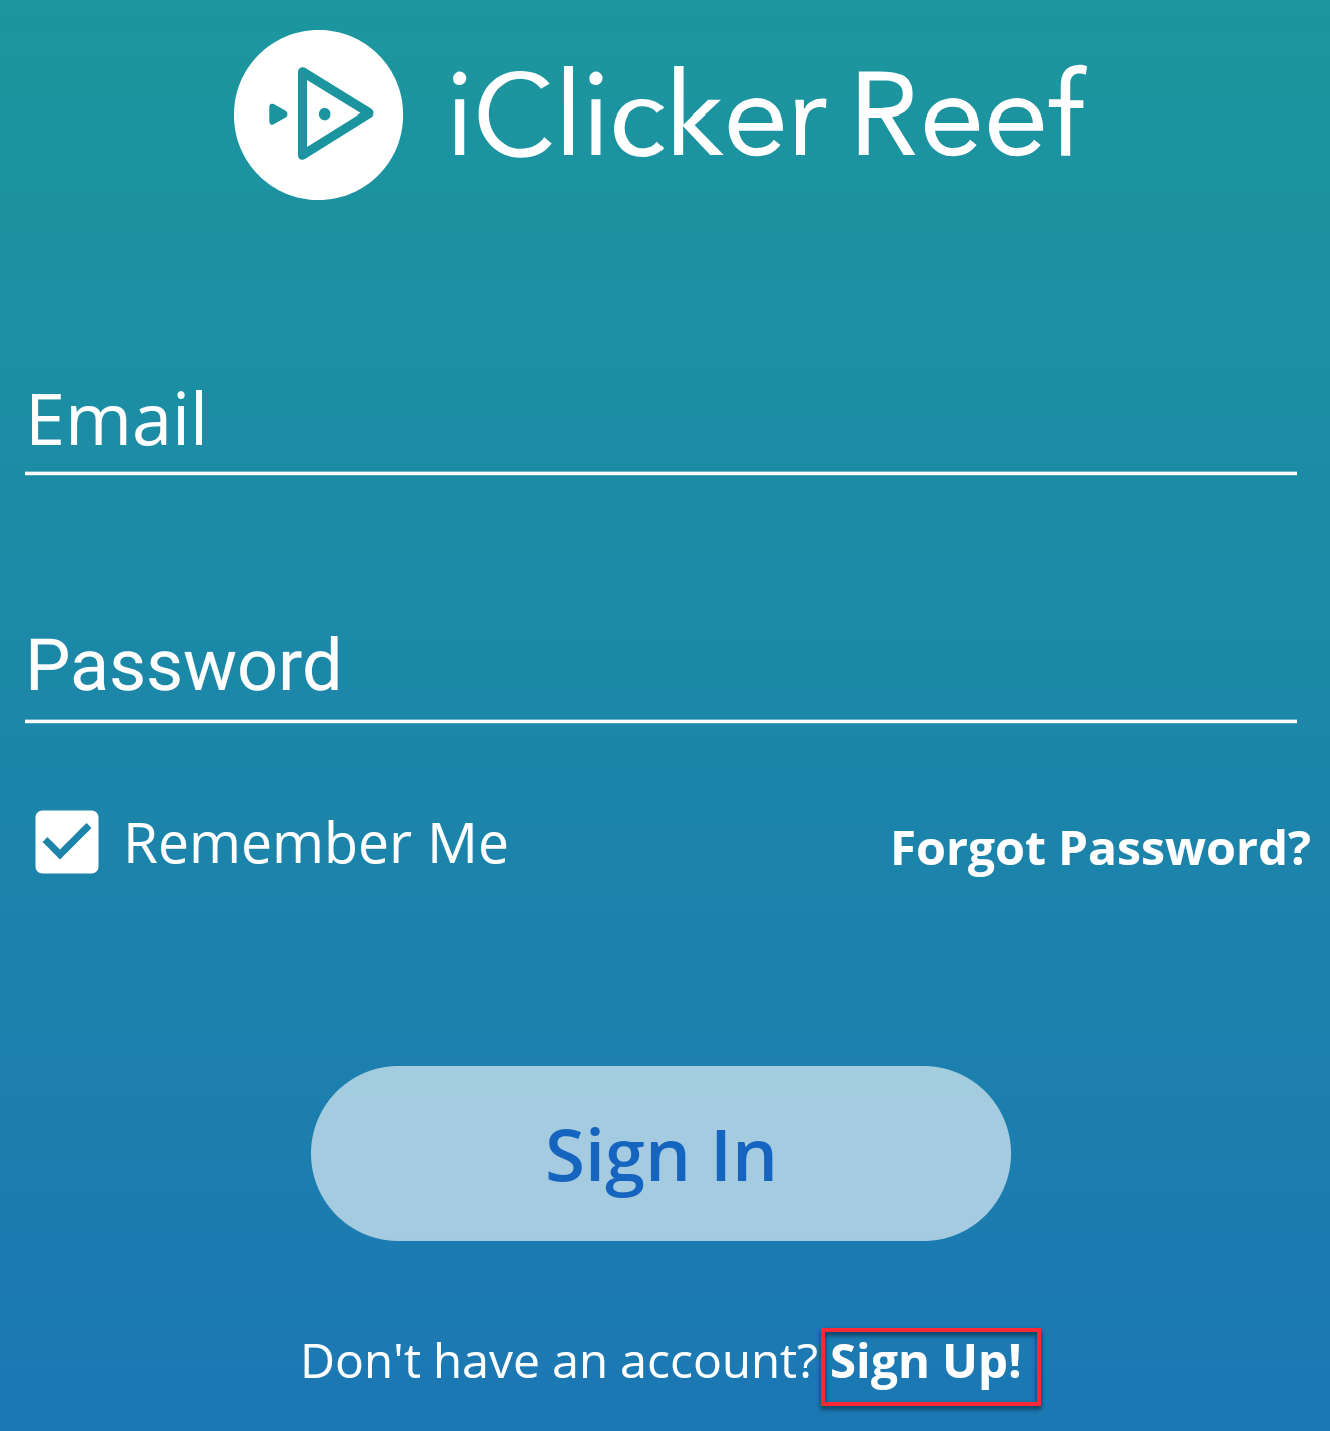 image of iclicker reef login screen